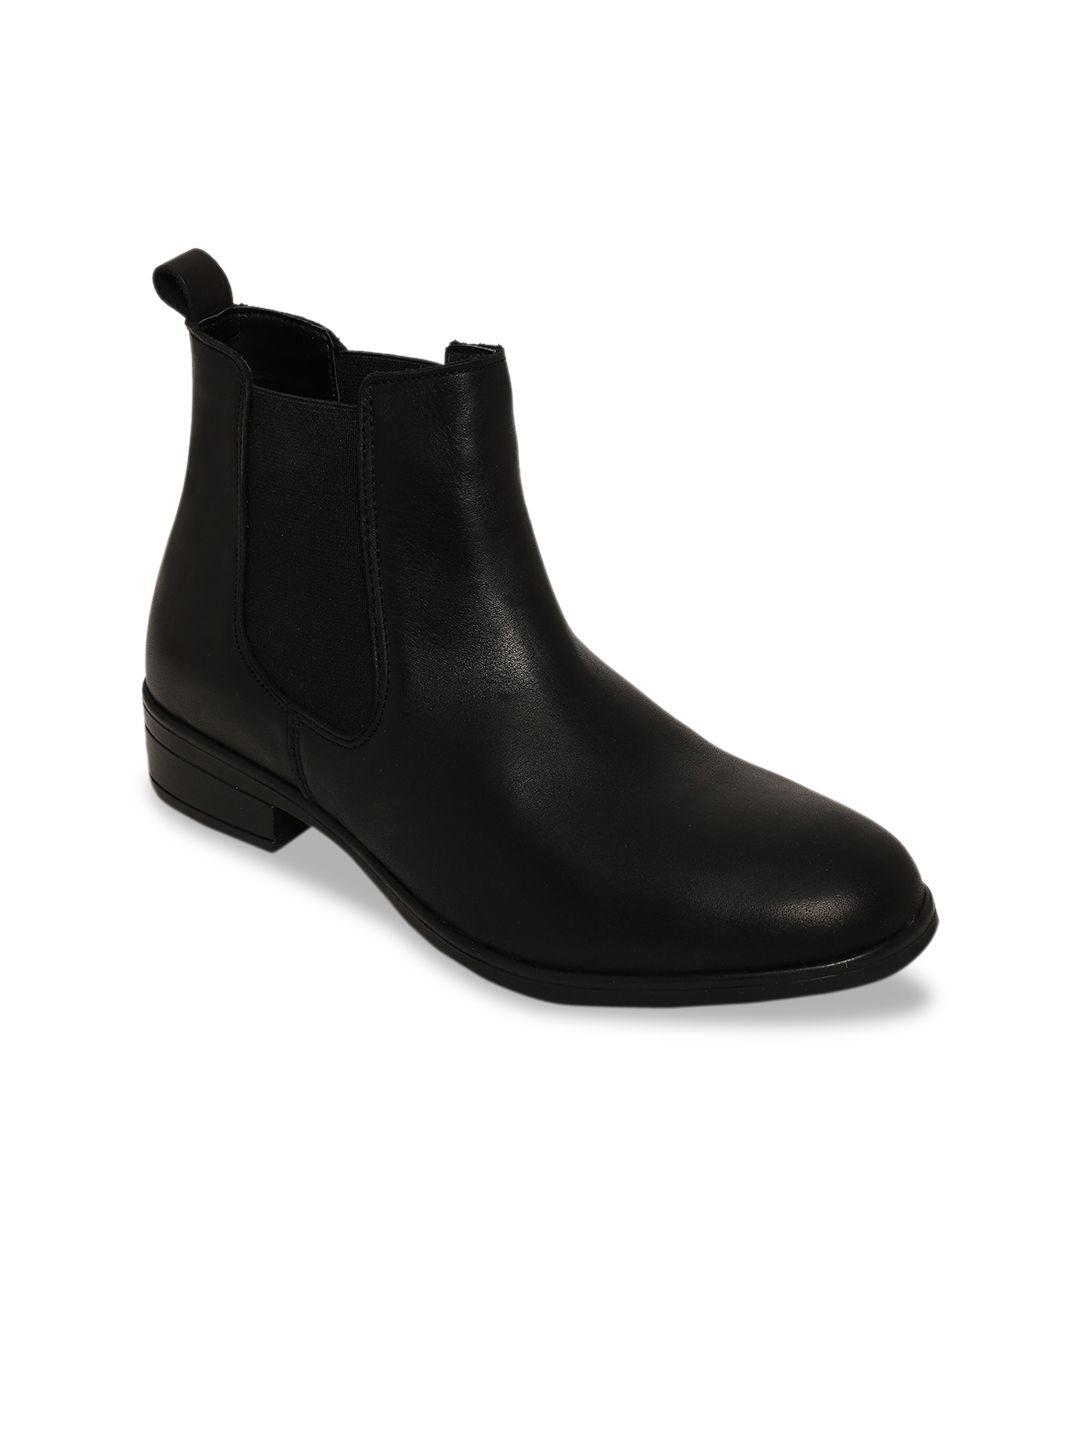 aldo women black leather flat chelsea boots